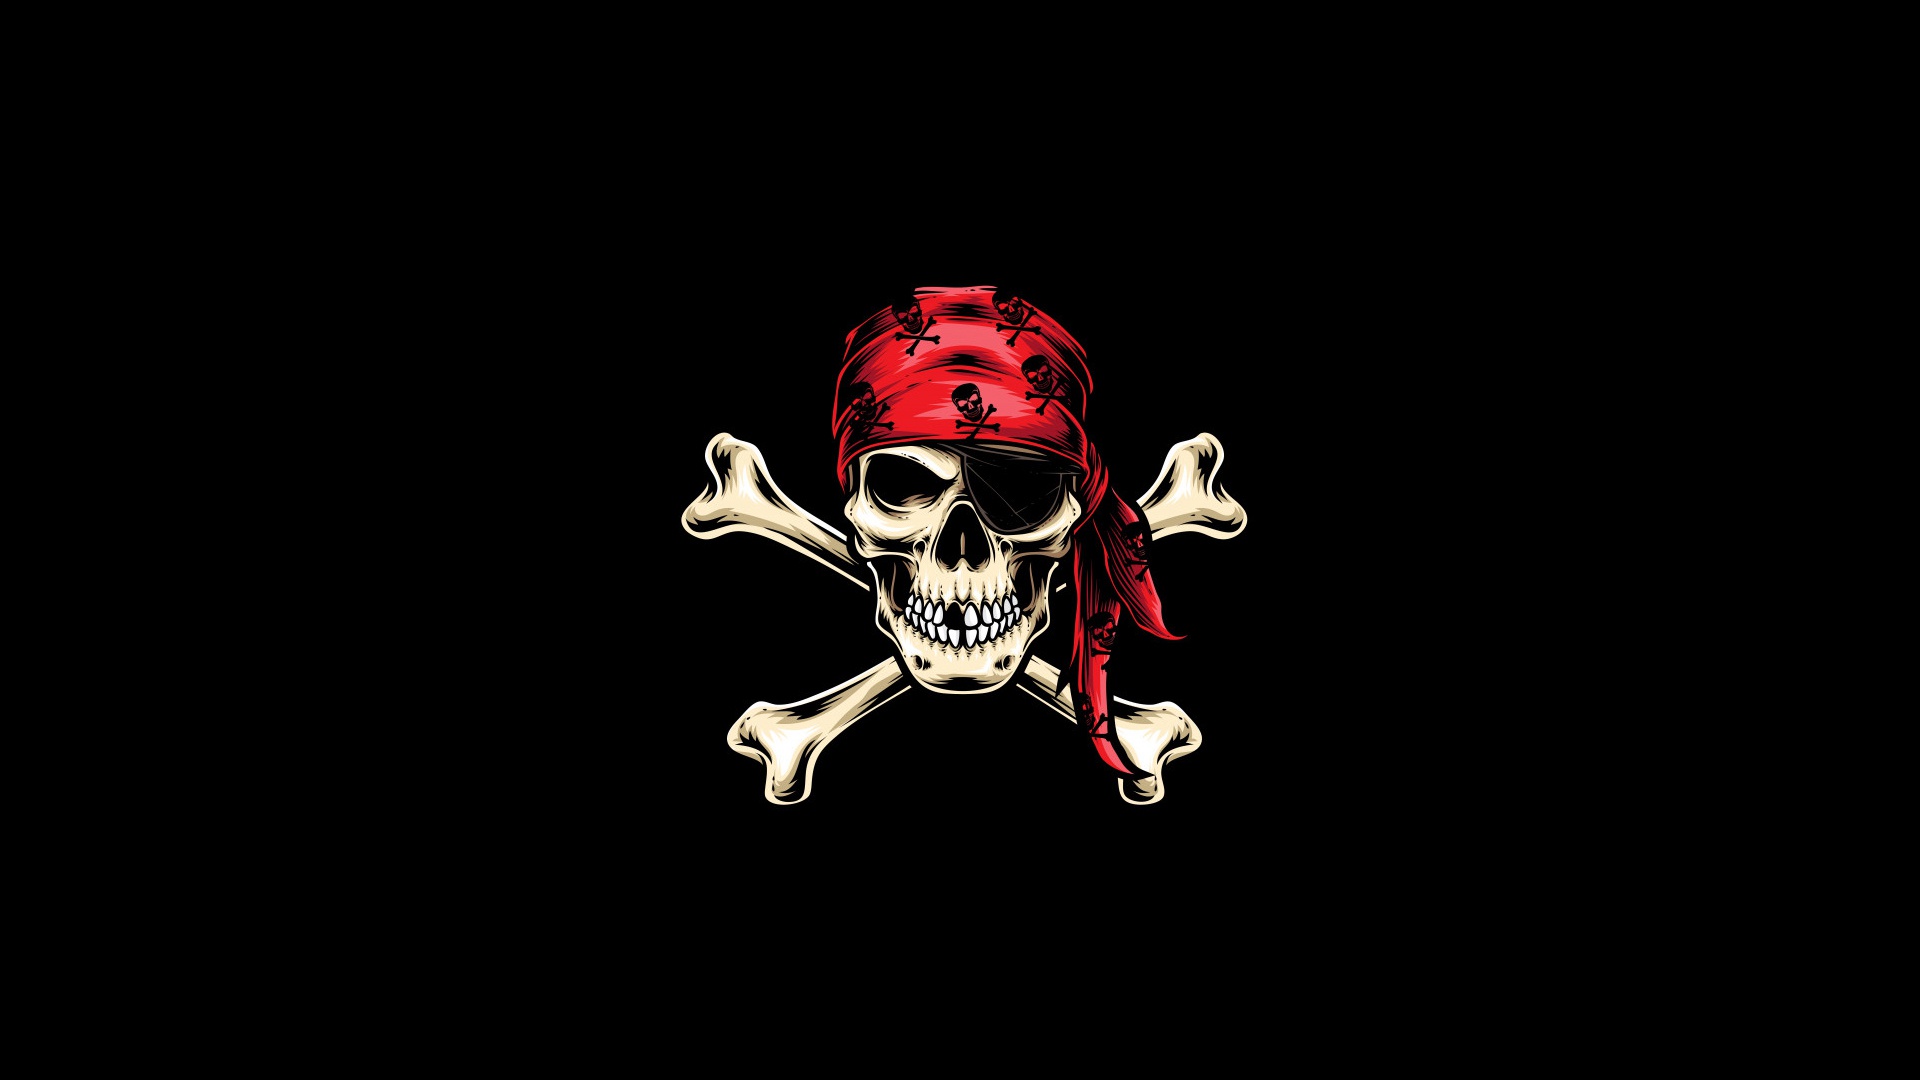 955563 descargar imagen oscuro, cráneos, huesos, pirata: fondos de pantalla y protectores de pantalla gratis